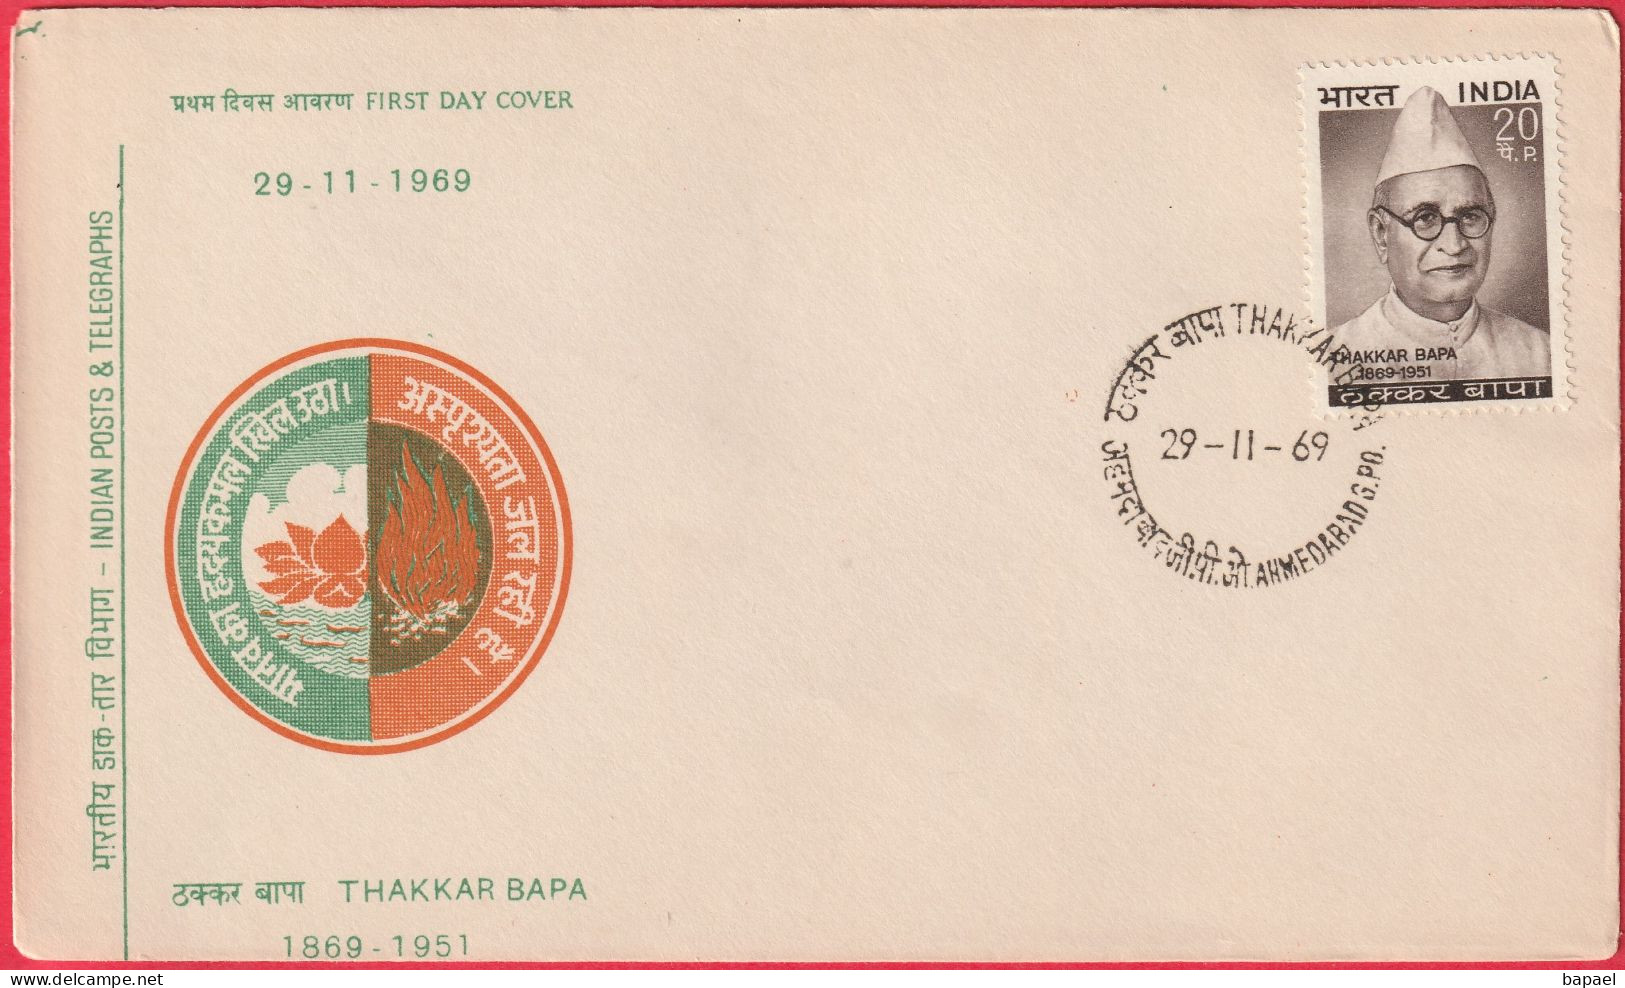 Inde (Ahmedabad - 29-11-69) - Enveloppe FDC - Amritlal Vithaldas Thakkar - FDC